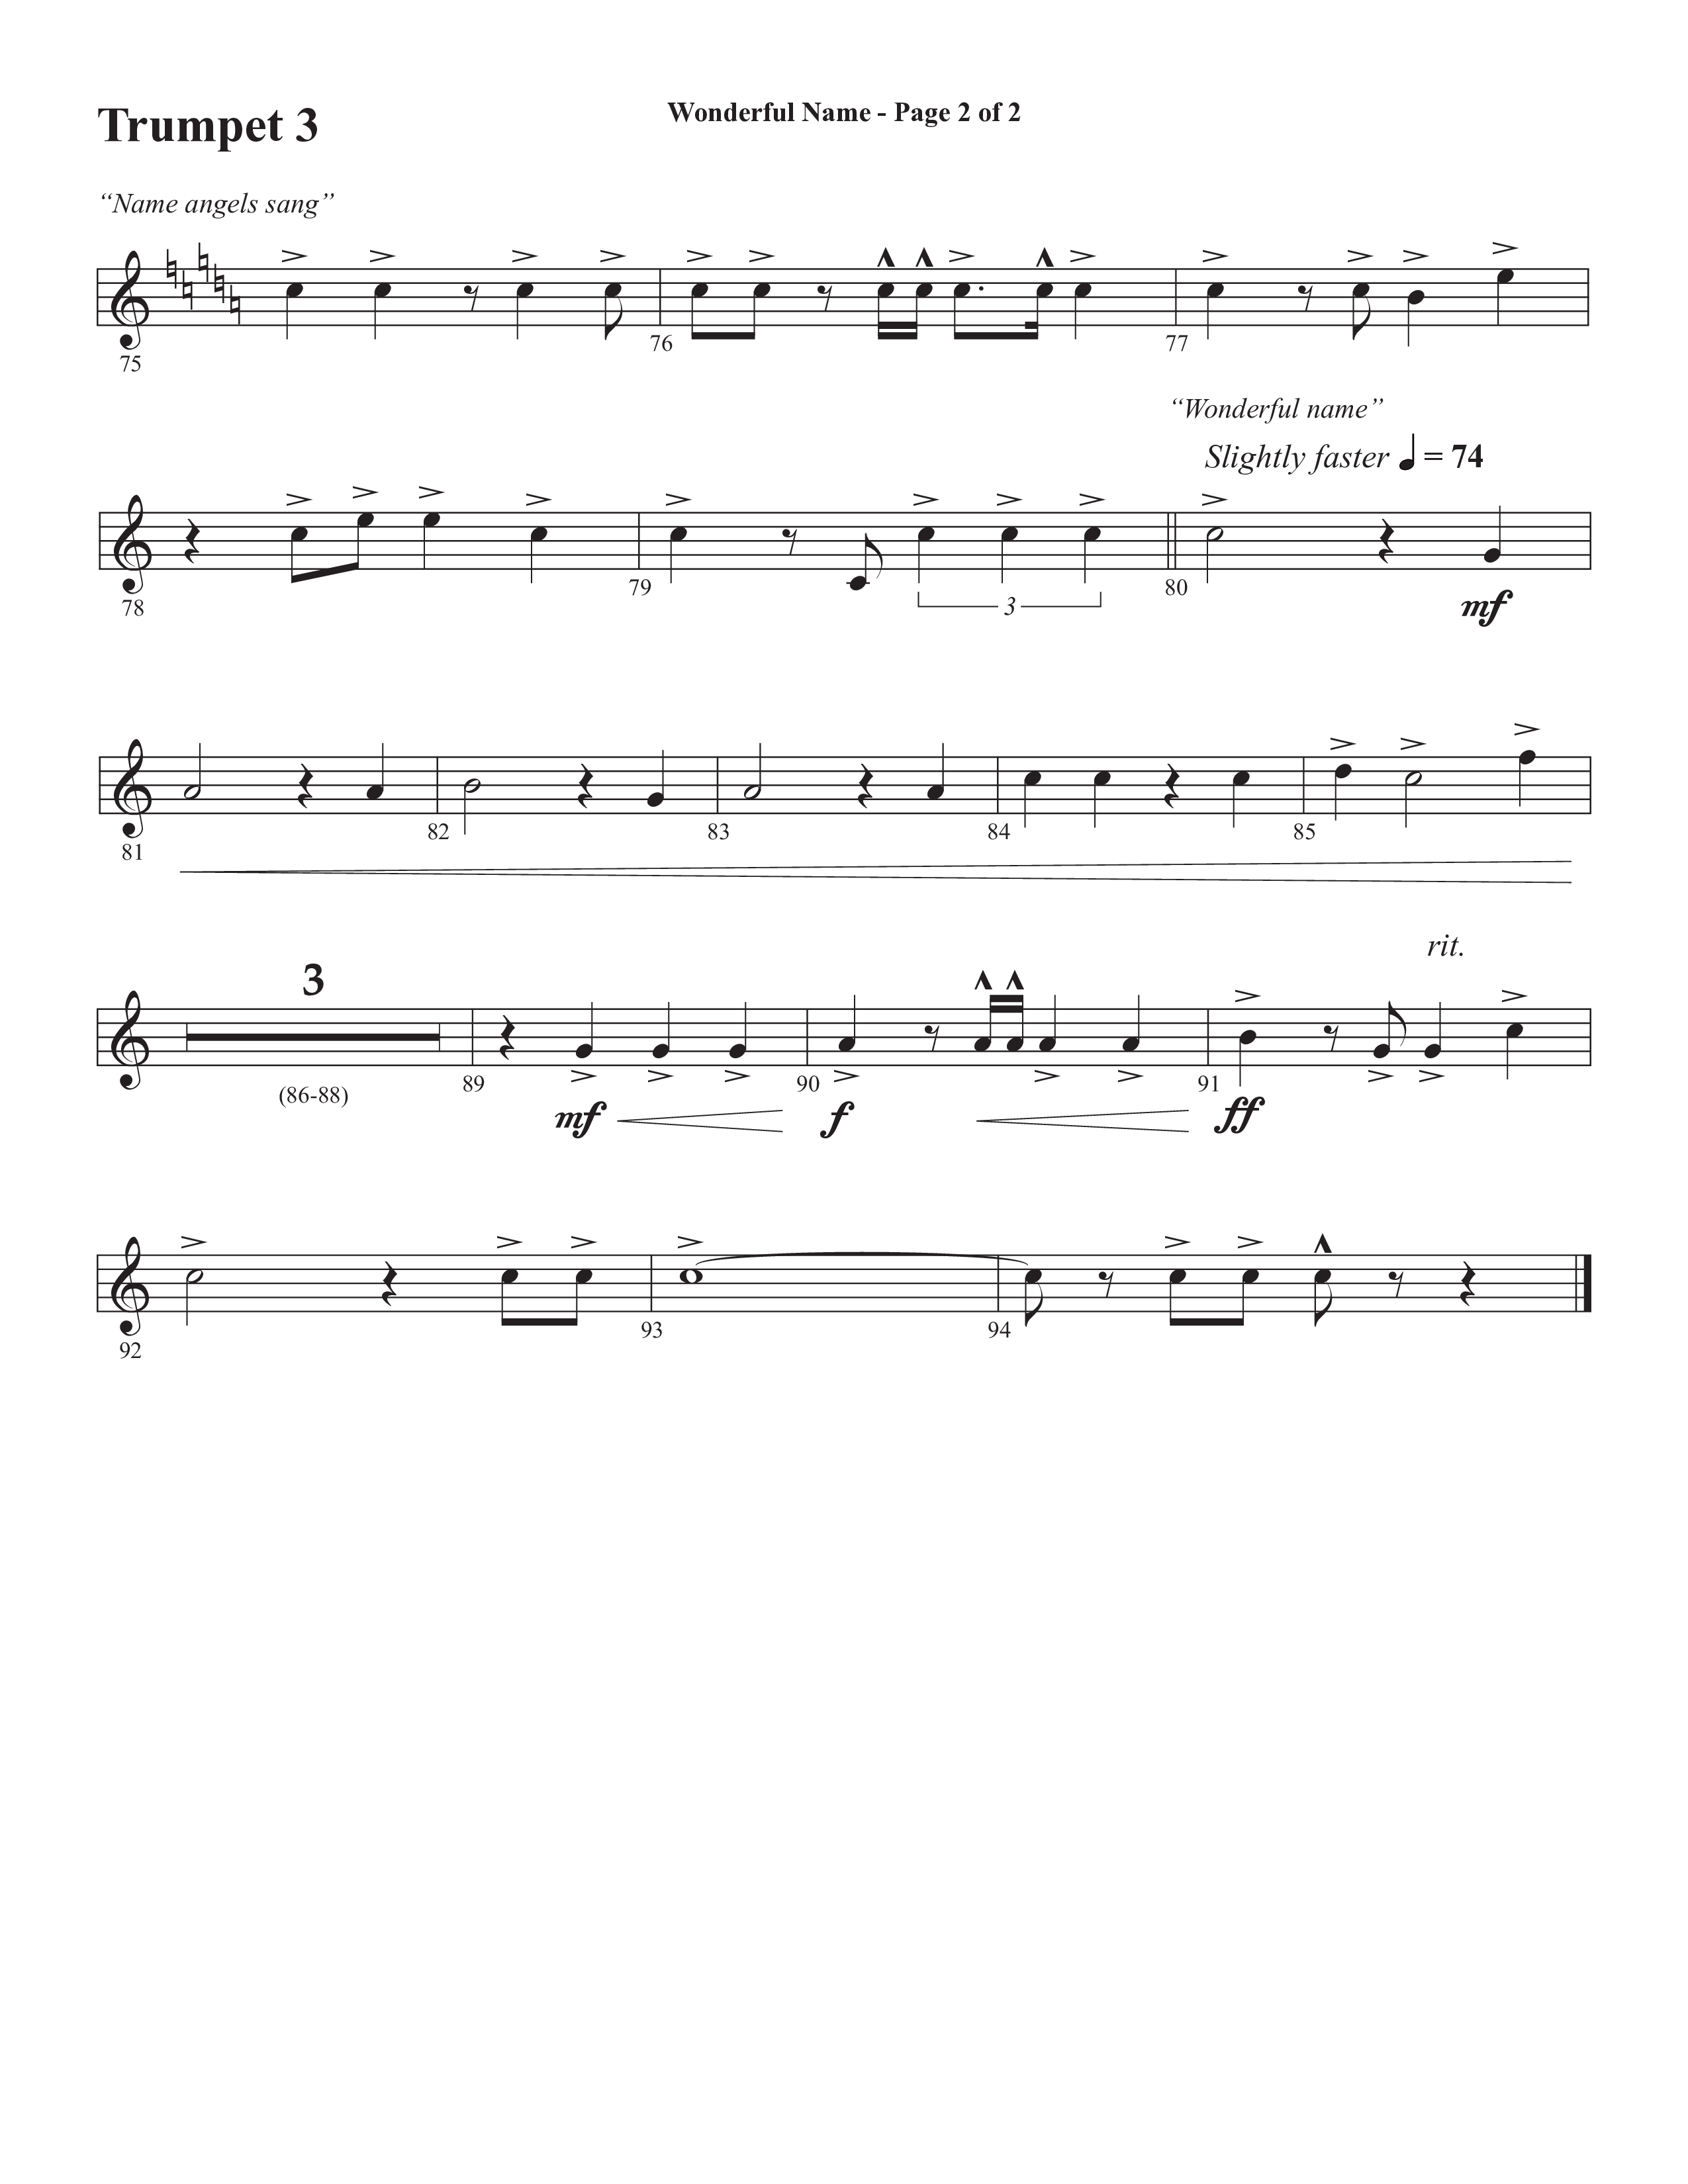 Wonderful Name (Choral Anthem SATB) Trumpet 3 (Semsen Music / Arr. John Bolin / Orch. Cliff Duren)